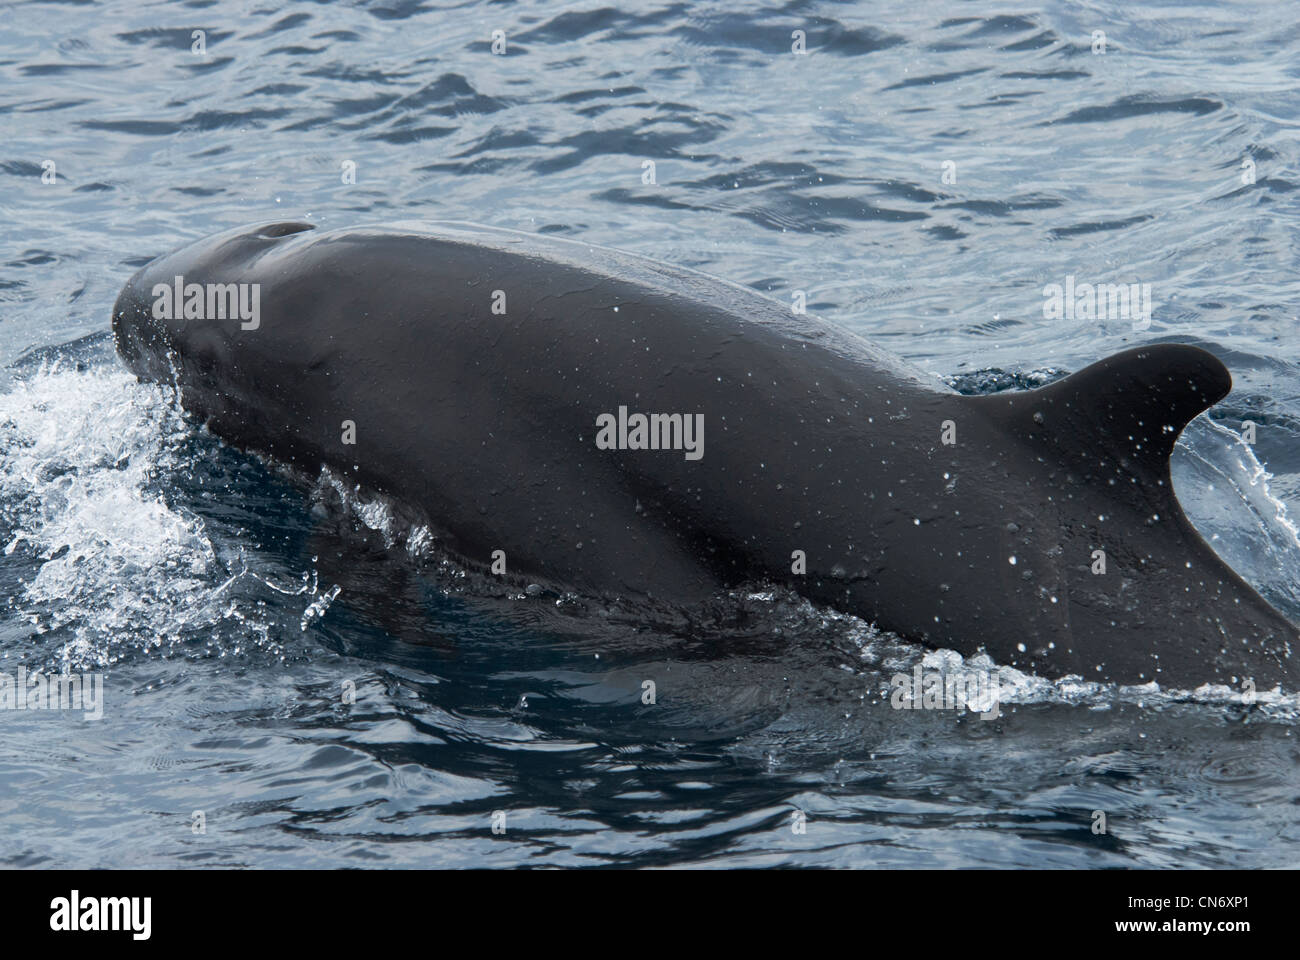 False Killer Whale, Pseudorca crassidens, surfaces next to whale watch boat, Maldives, Indian Ocean. Stock Photo